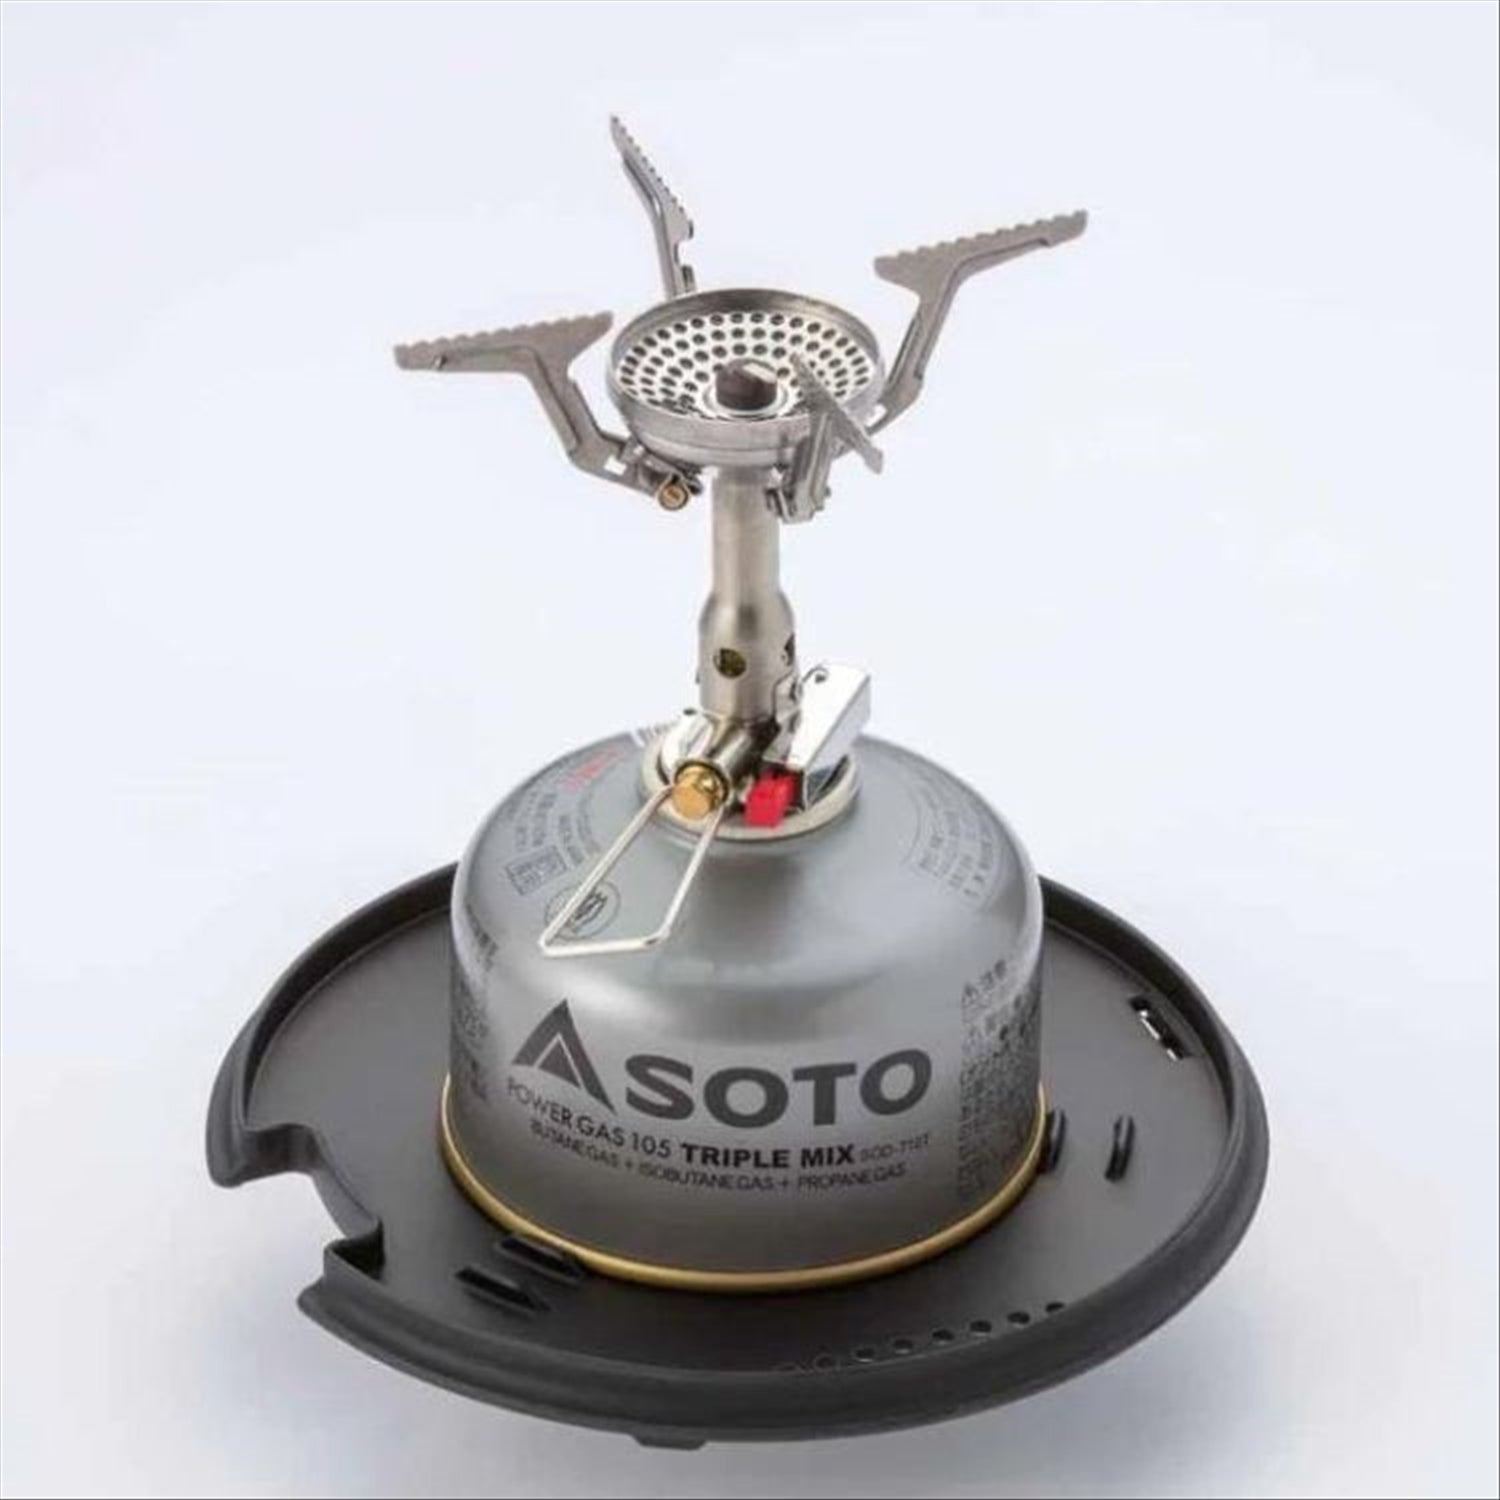 Soto Soto Navigator 2-Piece Cookset, 608g